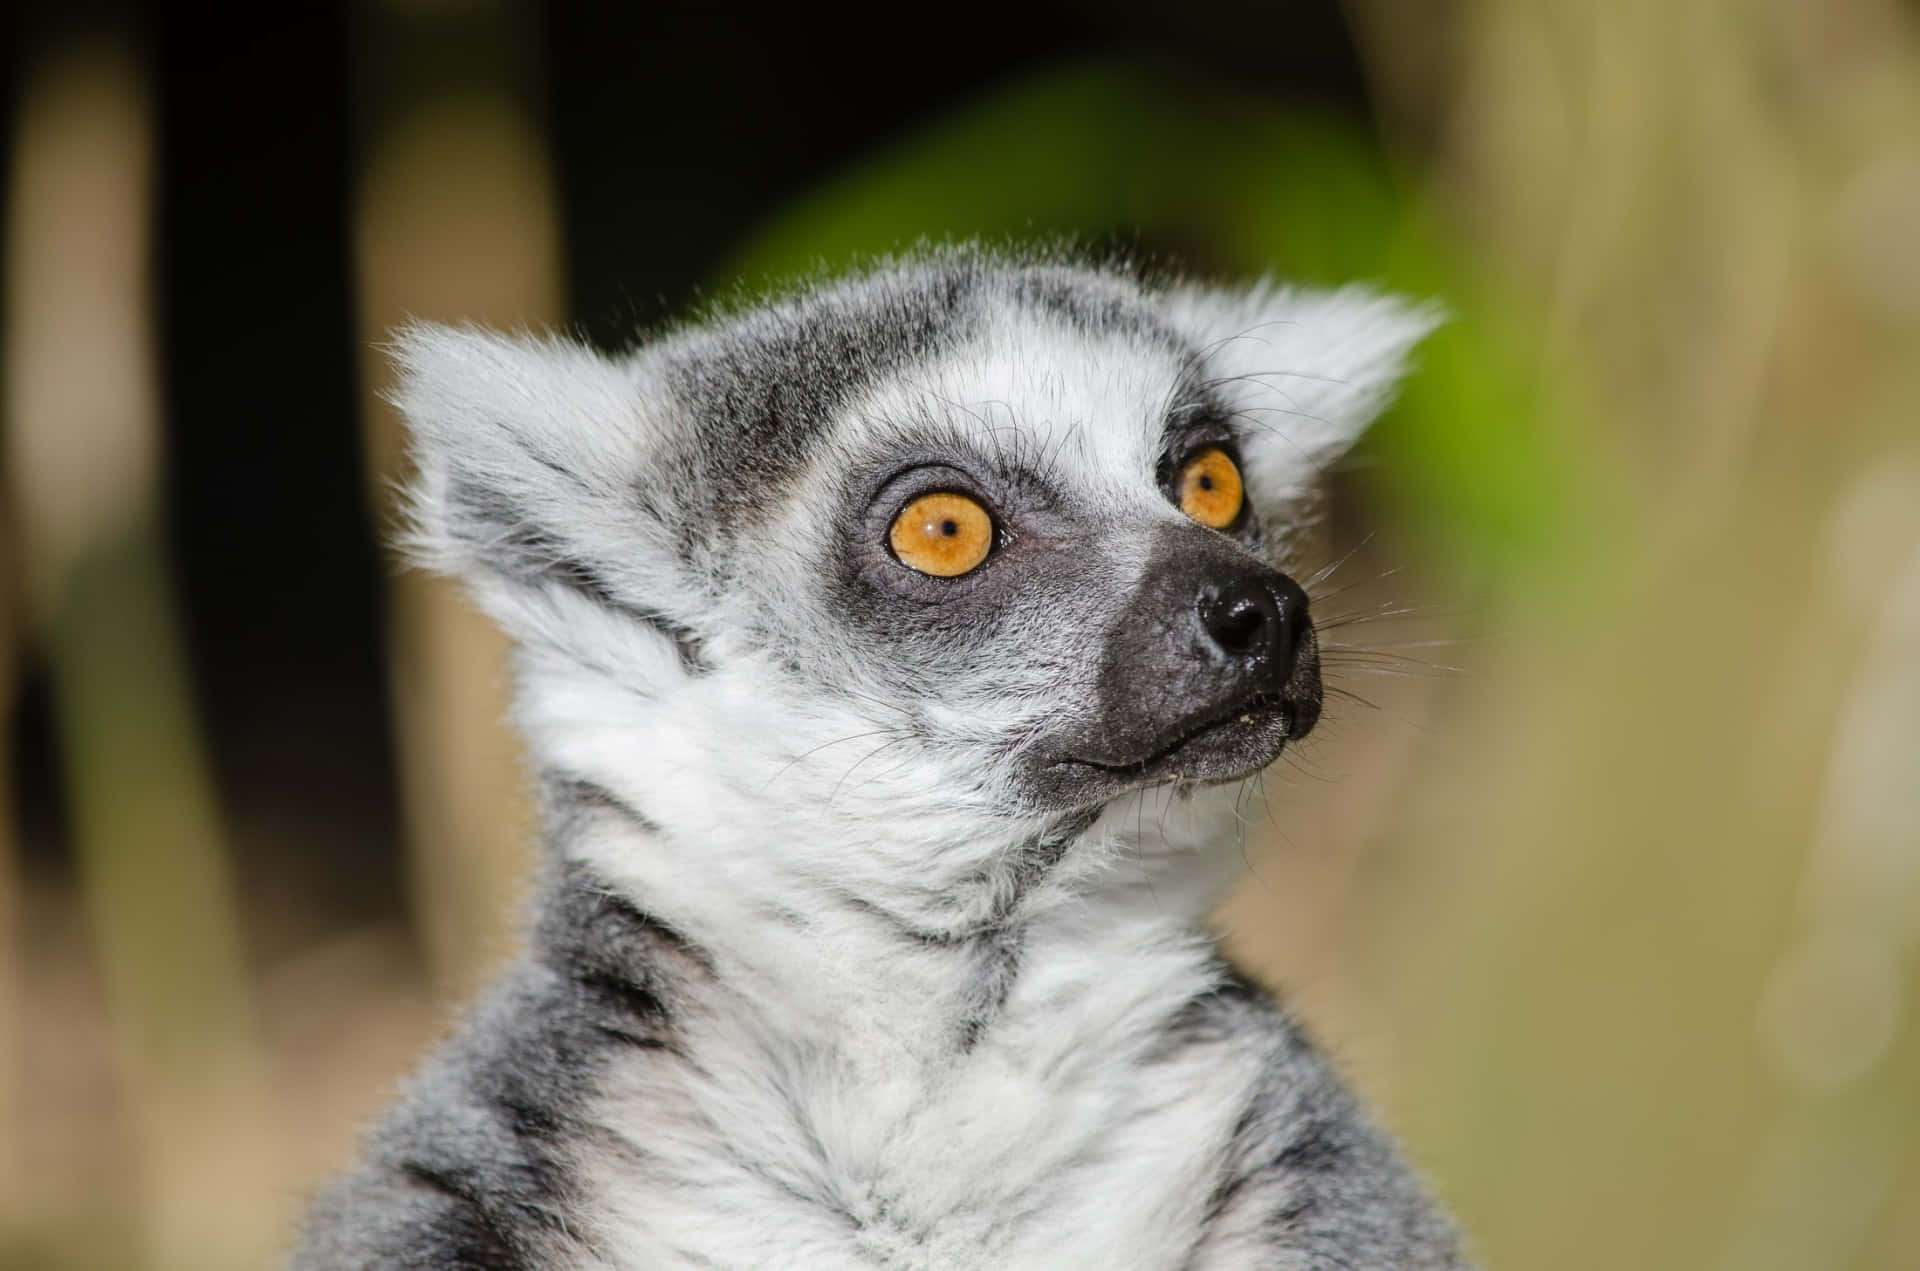 Captivating Lemur In Its Natural Habitat Background